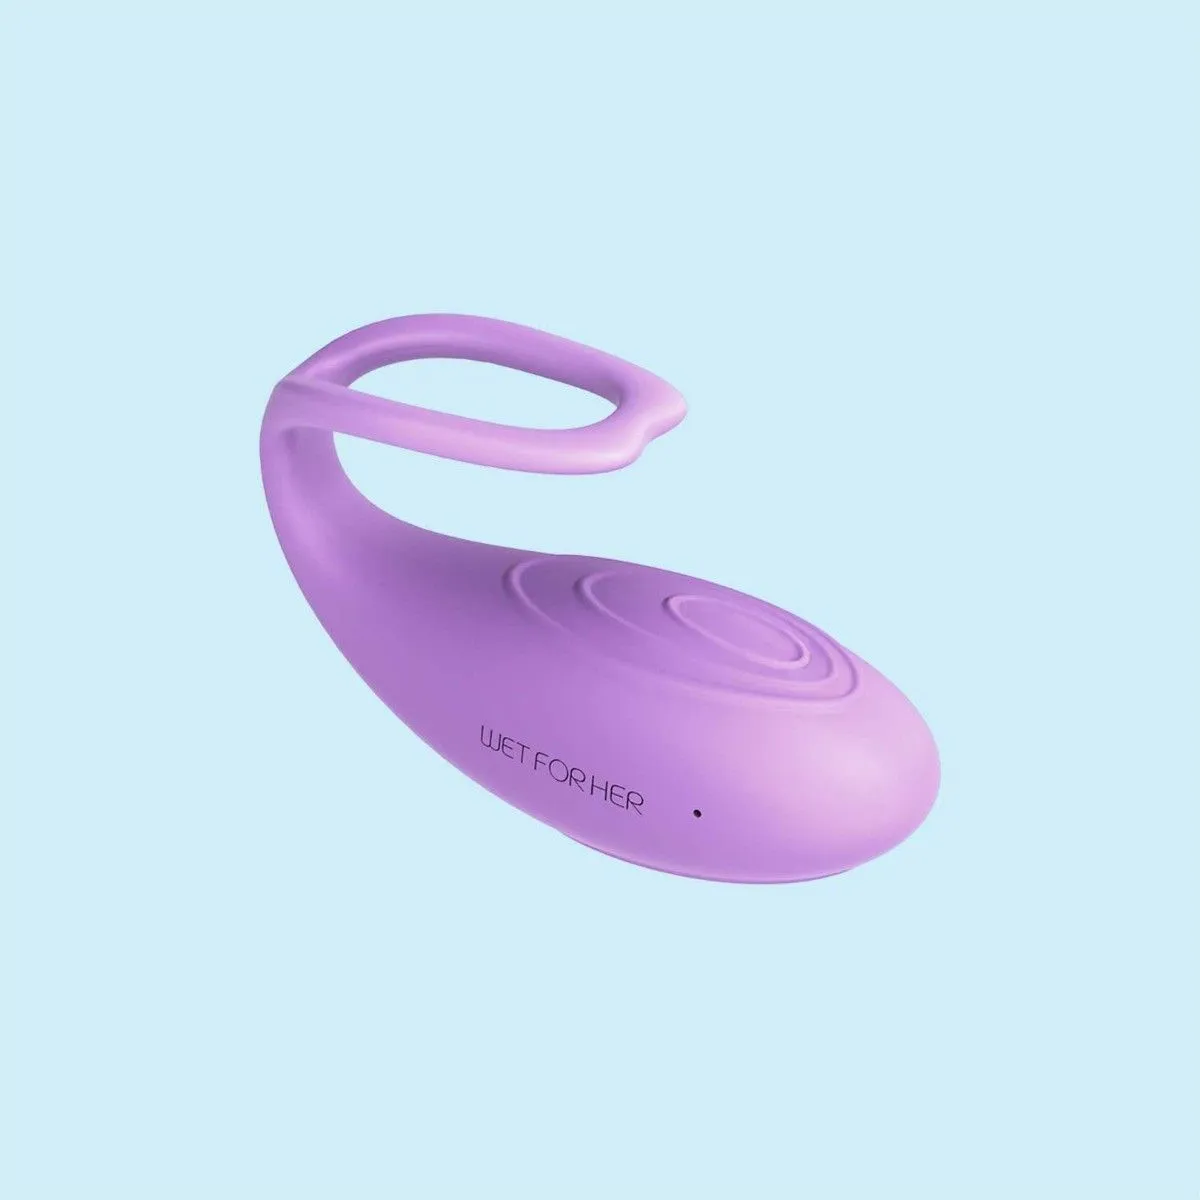 Scissoring Vibrator for Lesbians The Rockher™